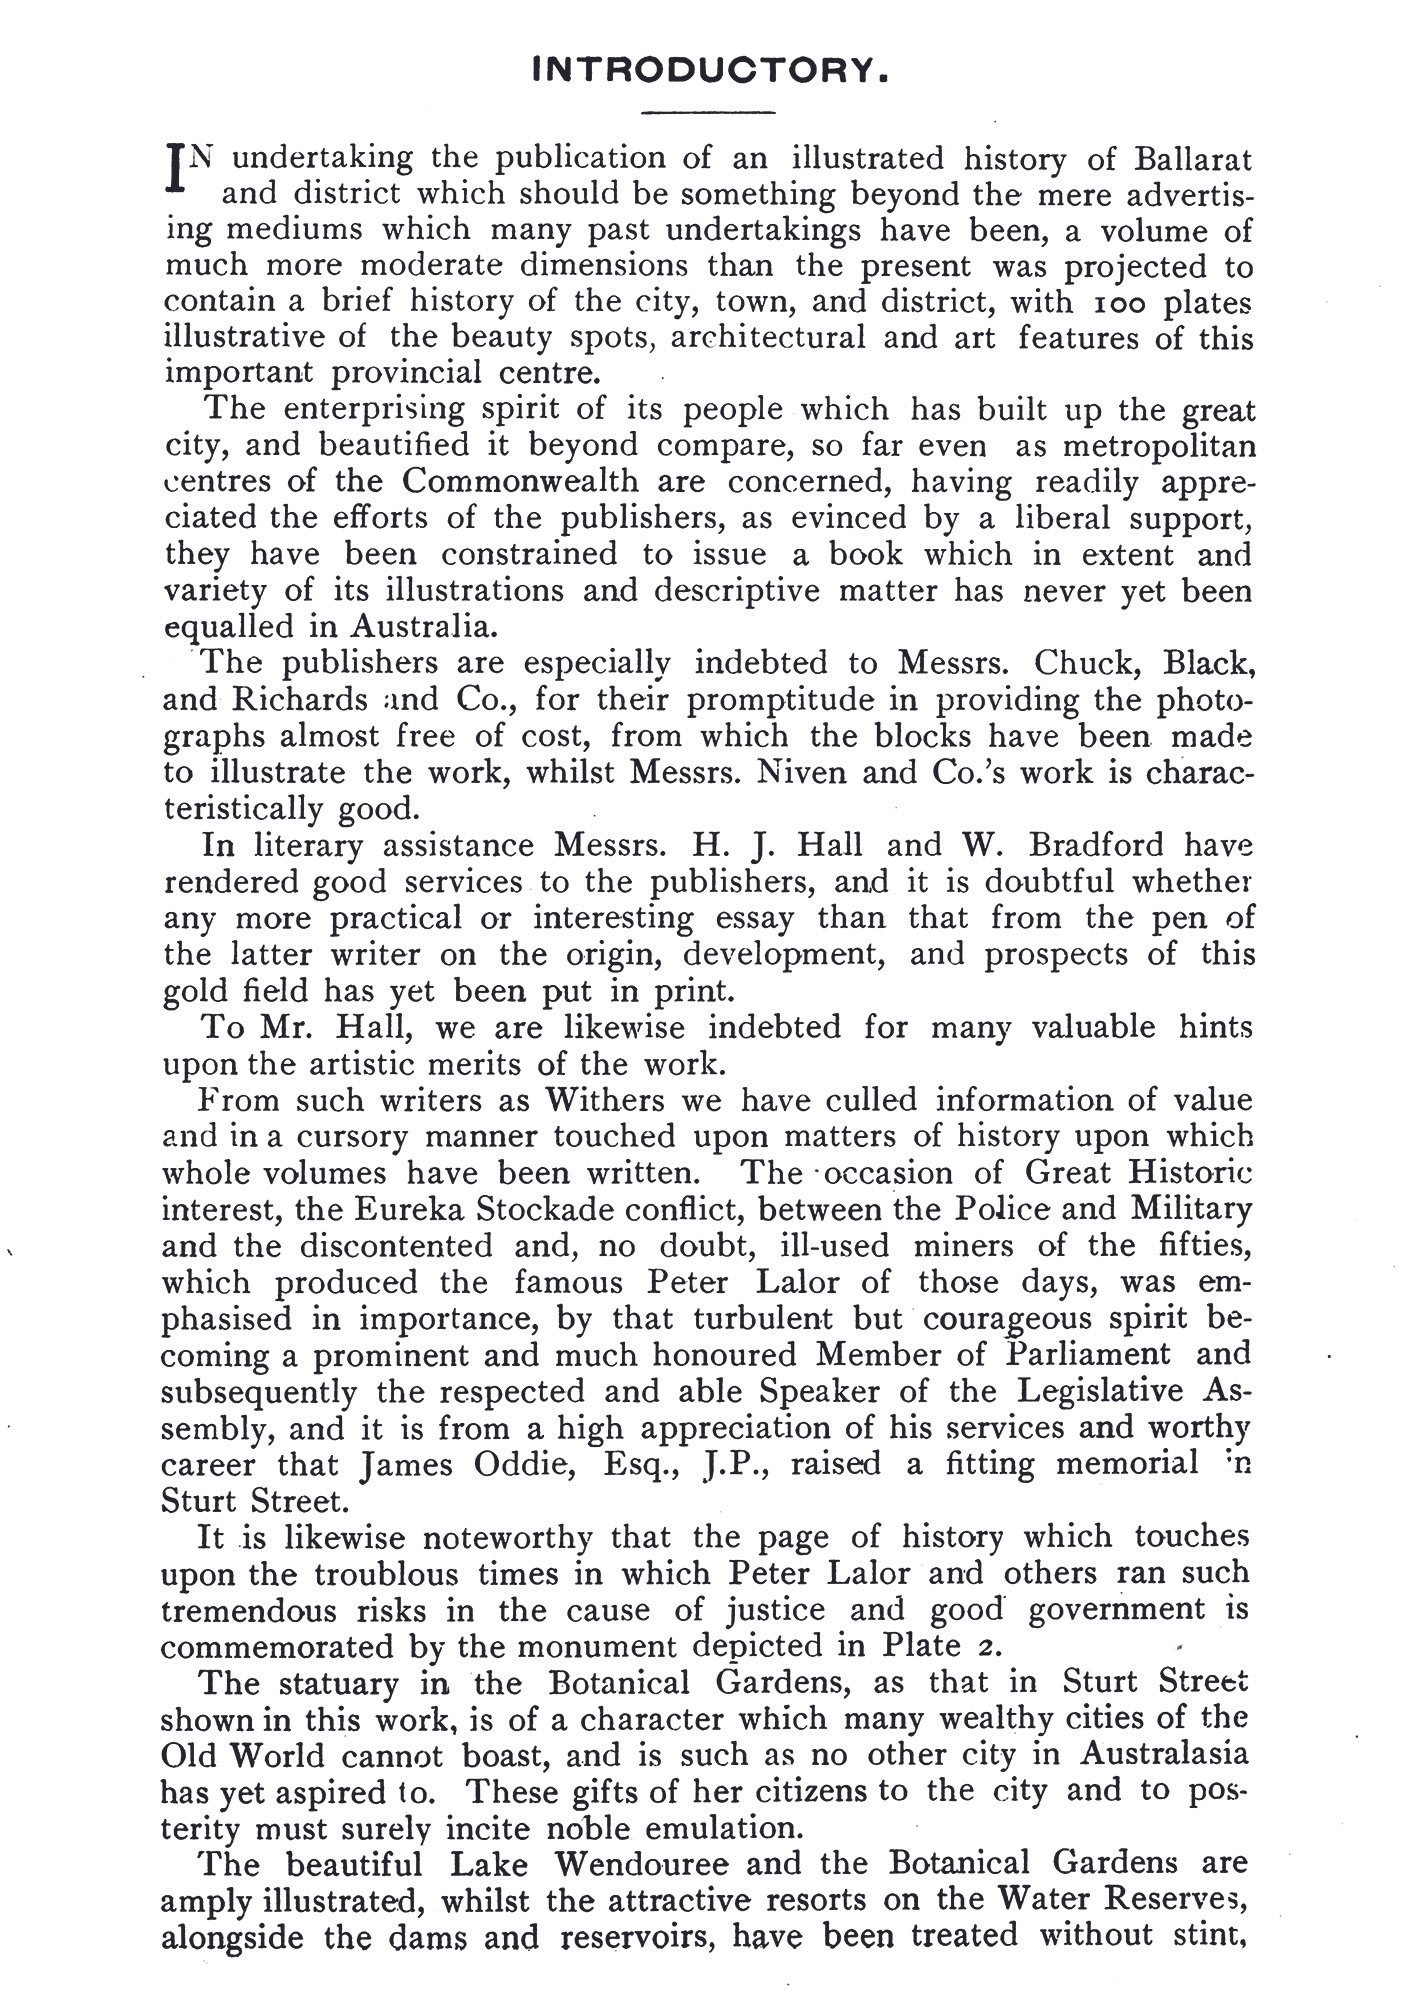 Ballarat & district in 1901 - Intro page 1 - web.jpg